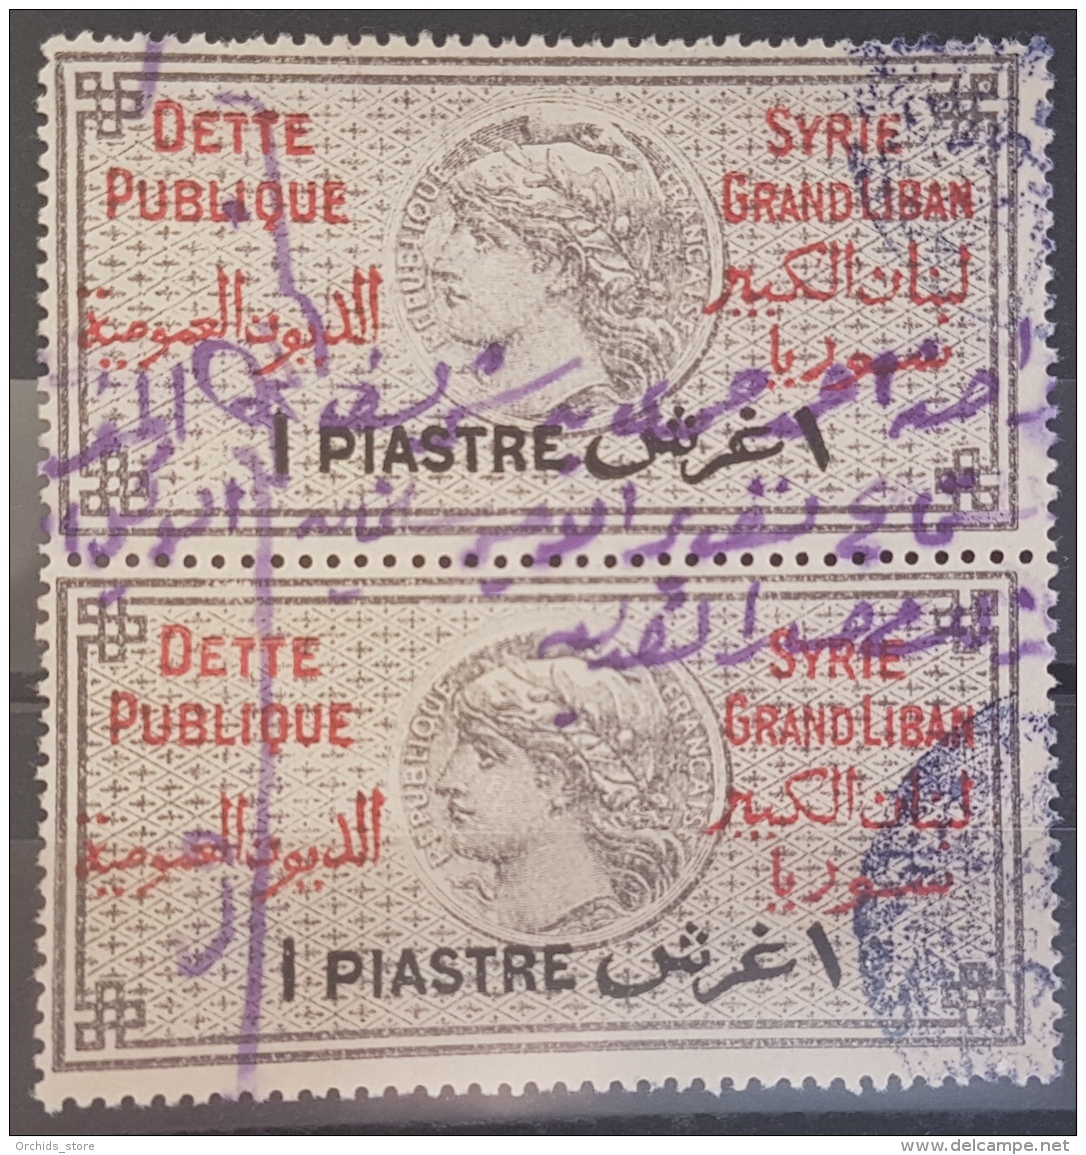 AS3 #35 - Lebanon Syria - Syrie Grand Liban Dette Publique Revenue Stamp 1 P - PAIR - Lebanon